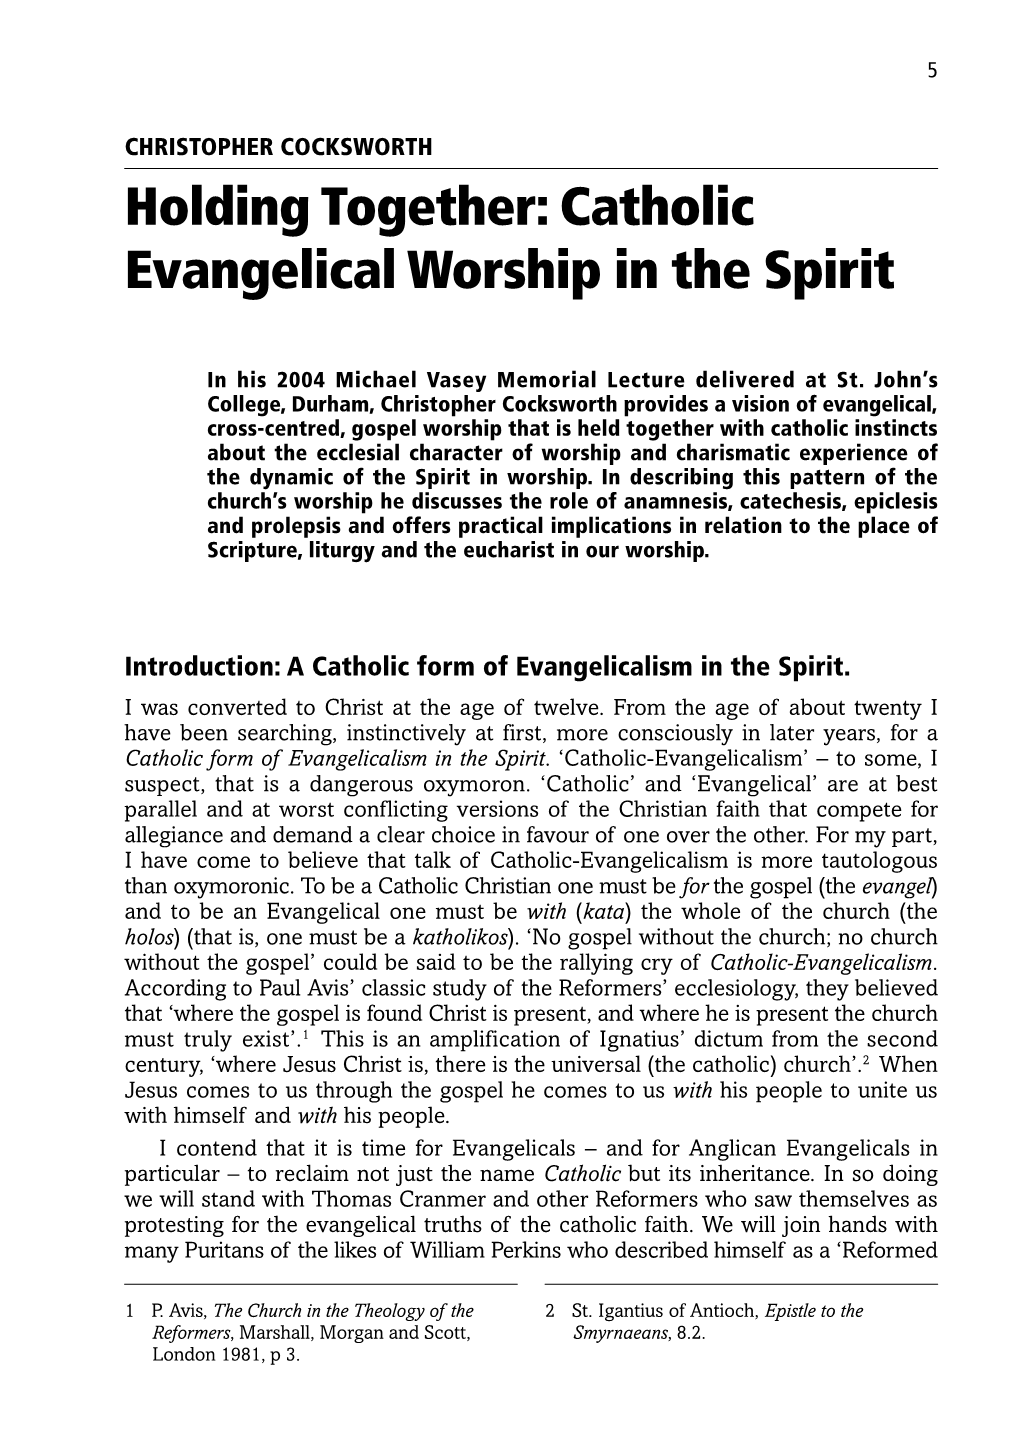 "Holding Together: Catholic Evangelical Worship in the Spirit